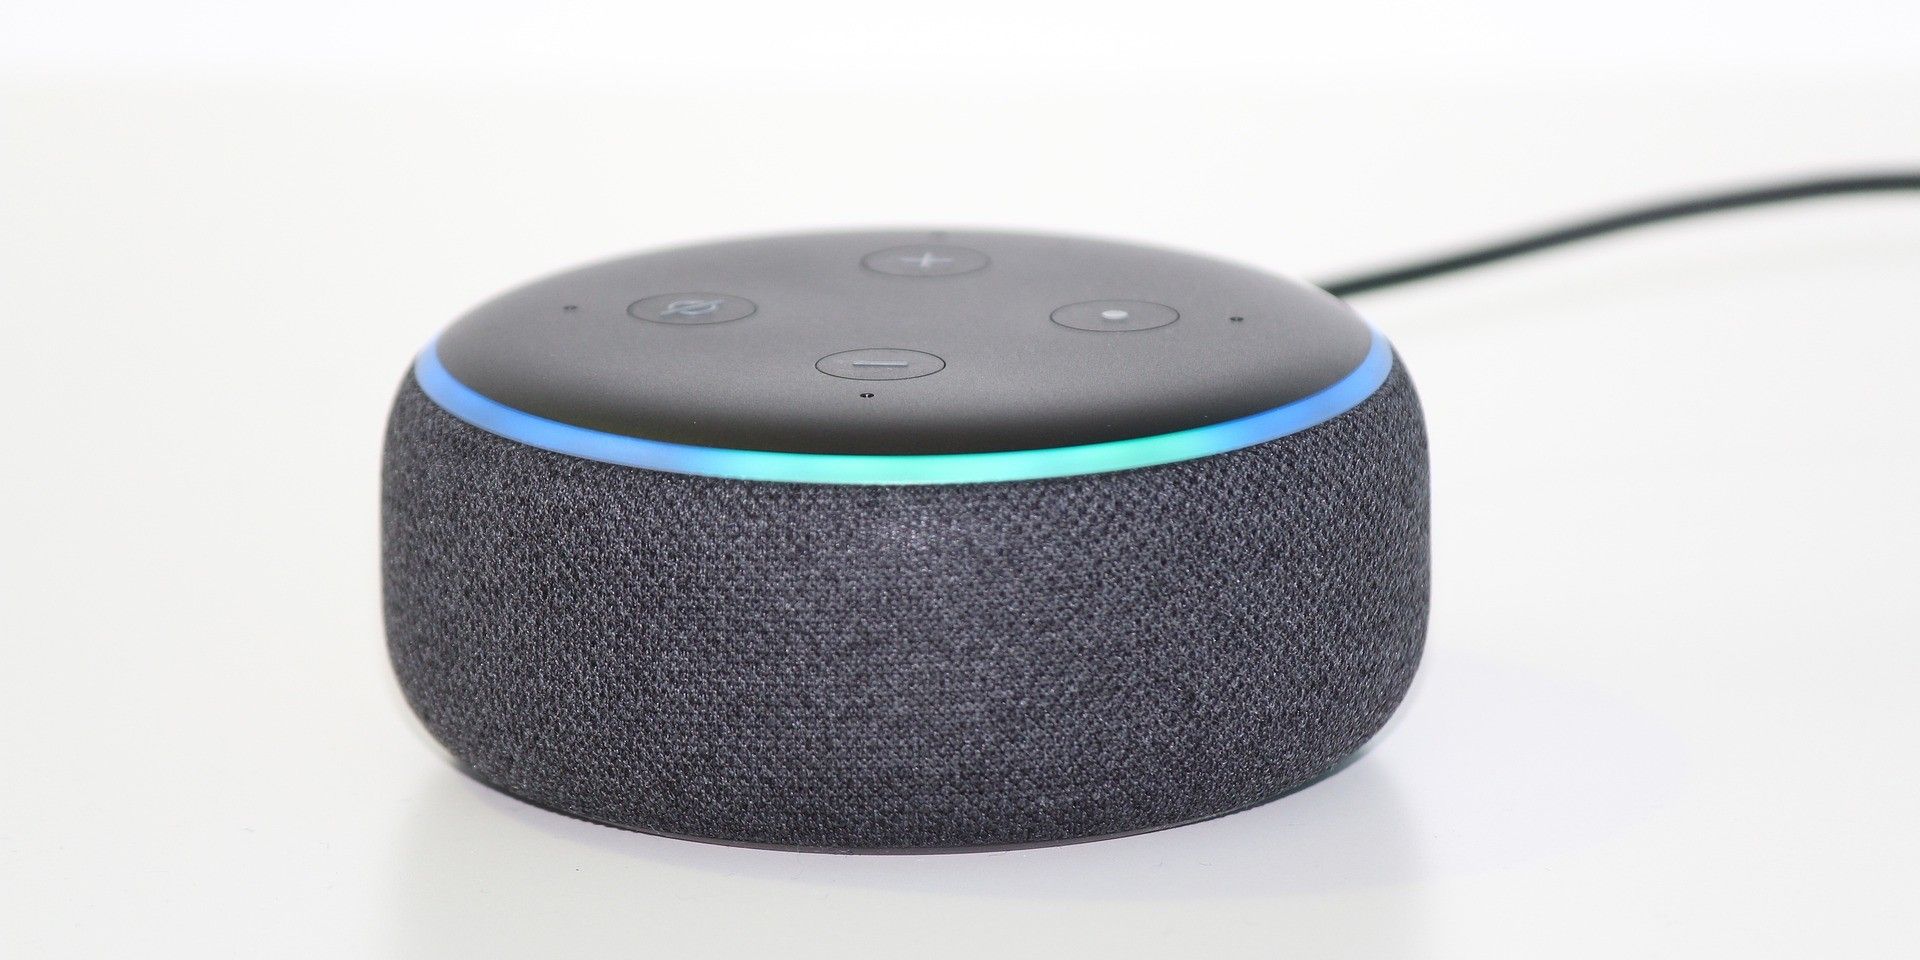 Amazon Echo Dot with Alexa virtual assistant